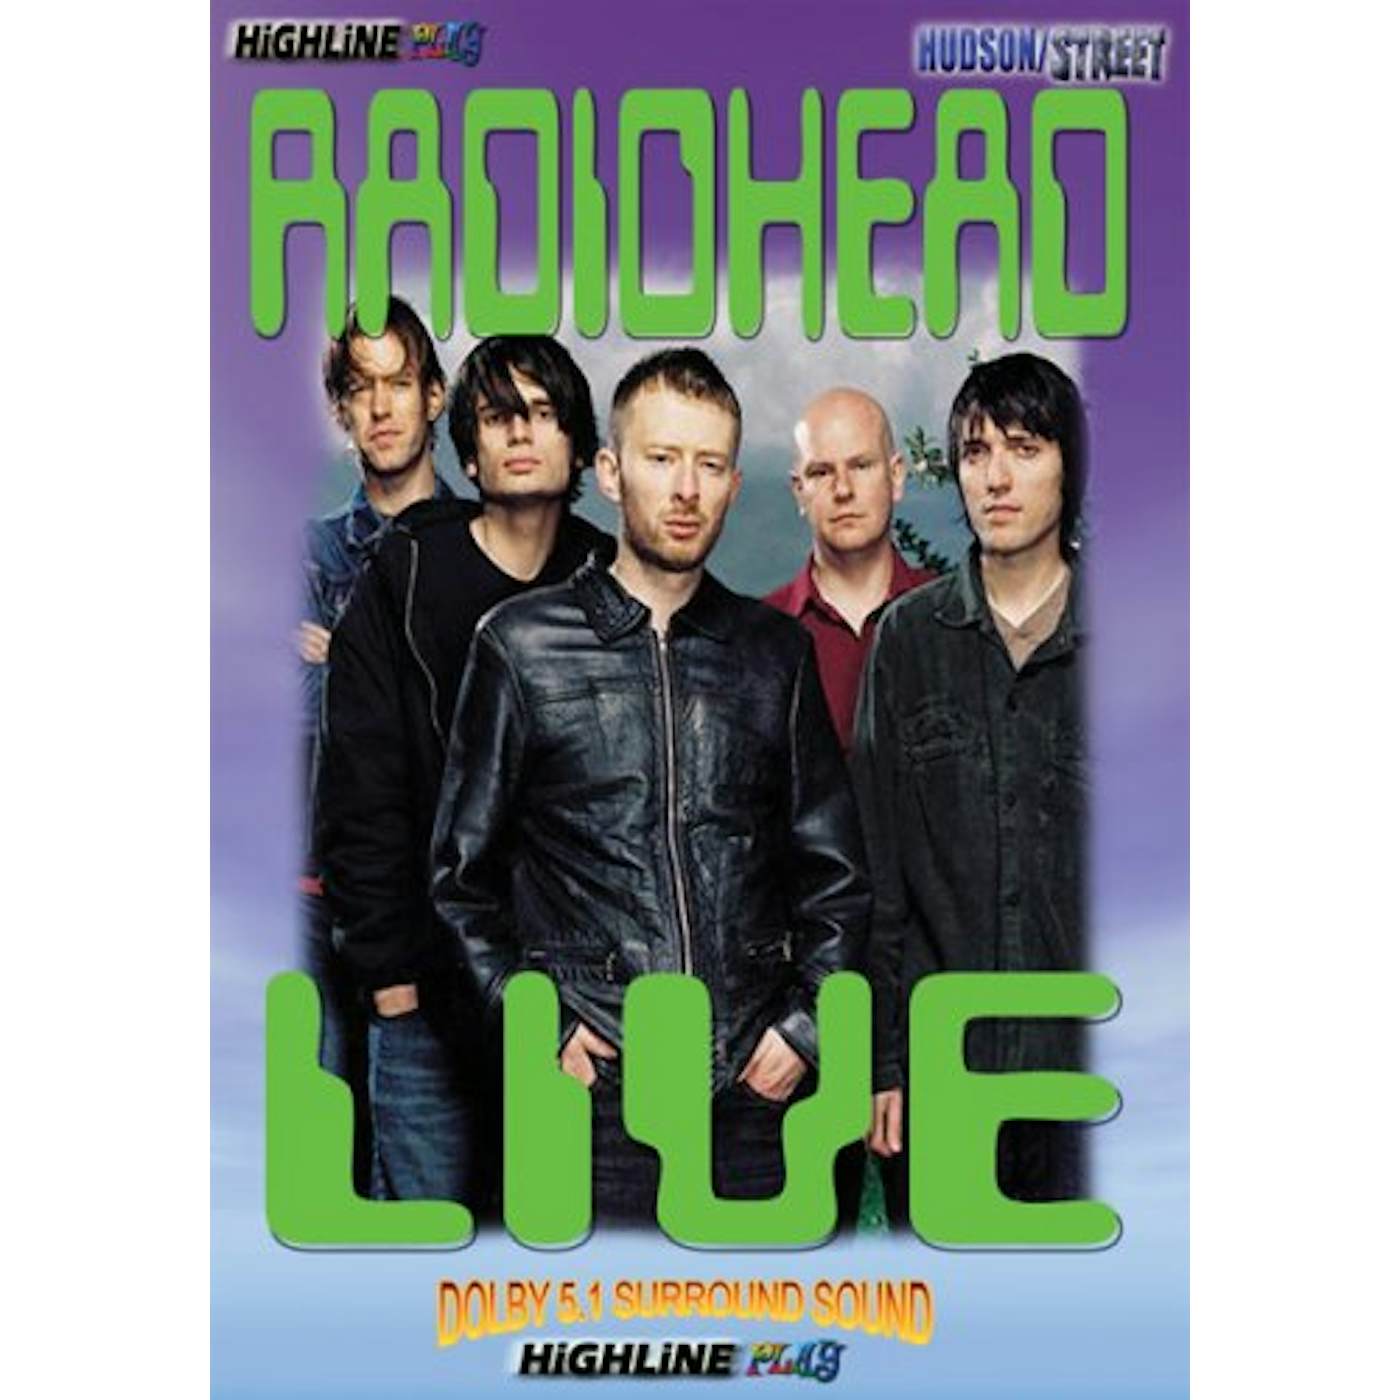 Radiohead LIVE DVD